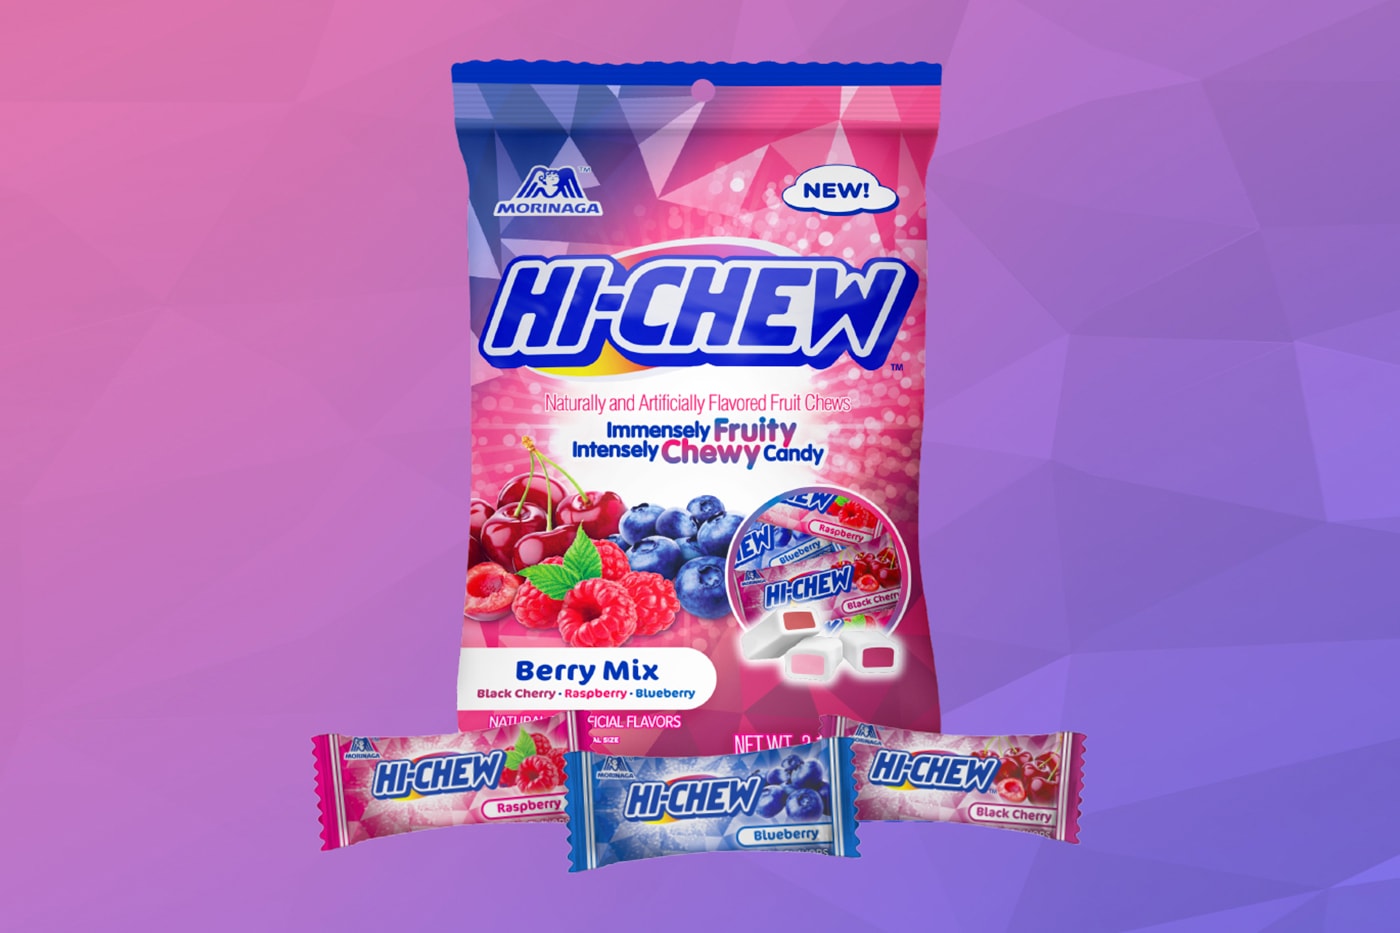 HI-CHEW Berry Mix Black Cherry Raspberry Blueberry release snacks candy Japan  Morinaga & Company 7-Eleven 